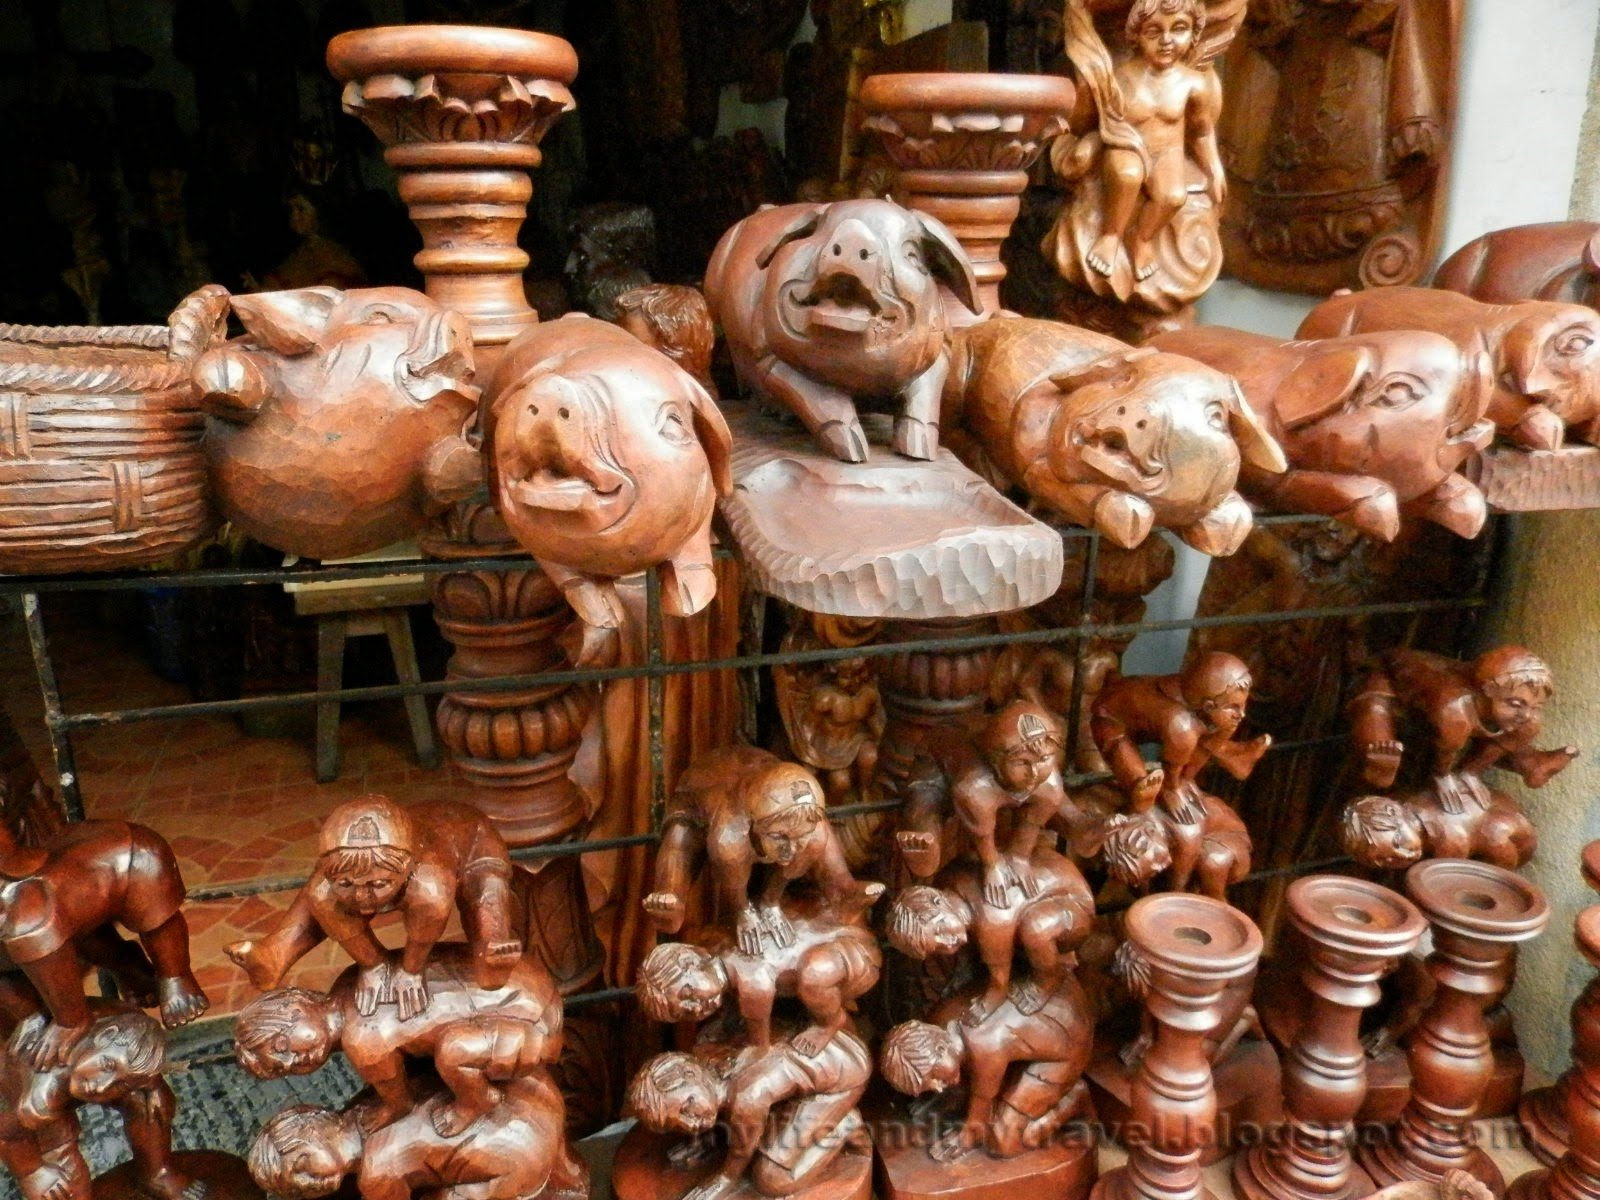 Manila Wood Carvings